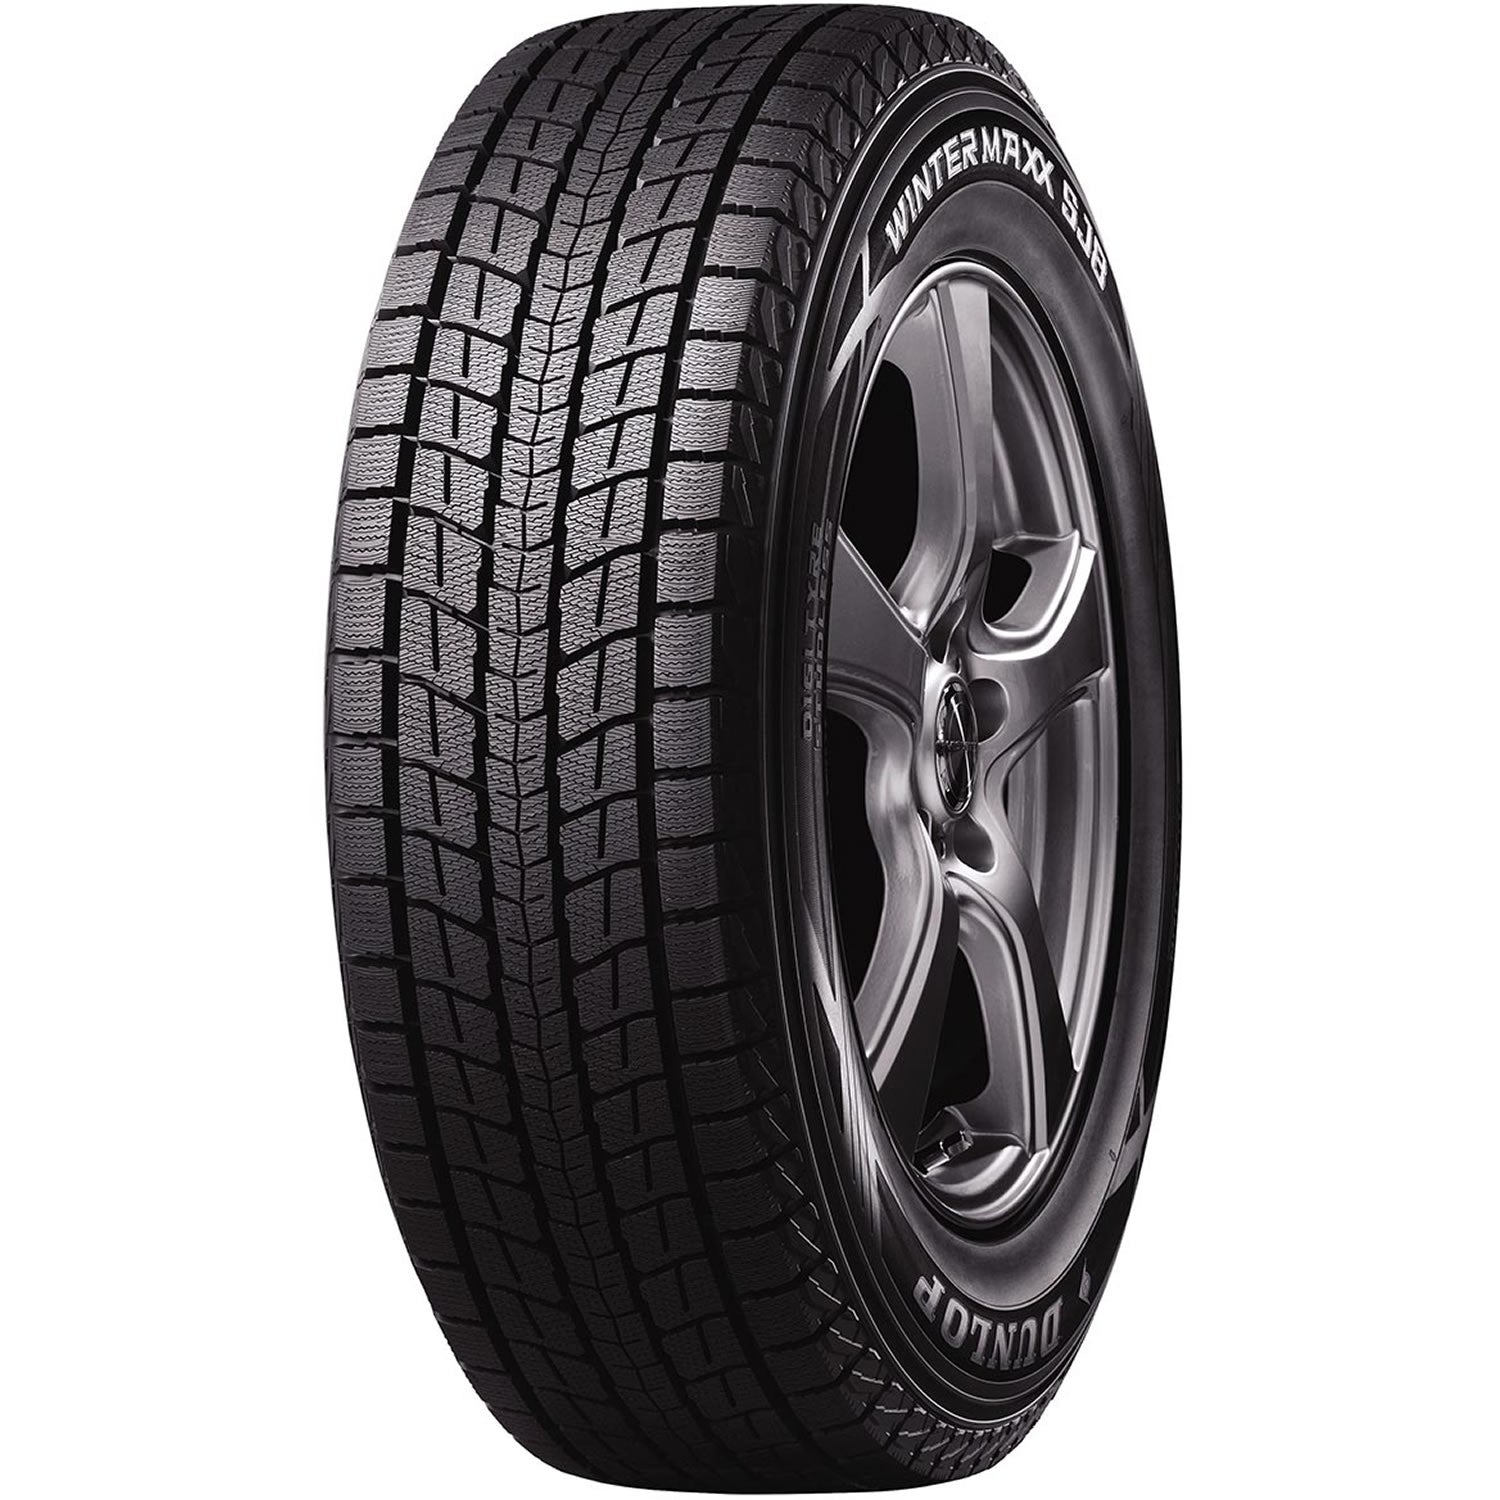 DUNLOP WINTER MAXX SJ8 245/70R17 (30.6X9.7R 17) Tires